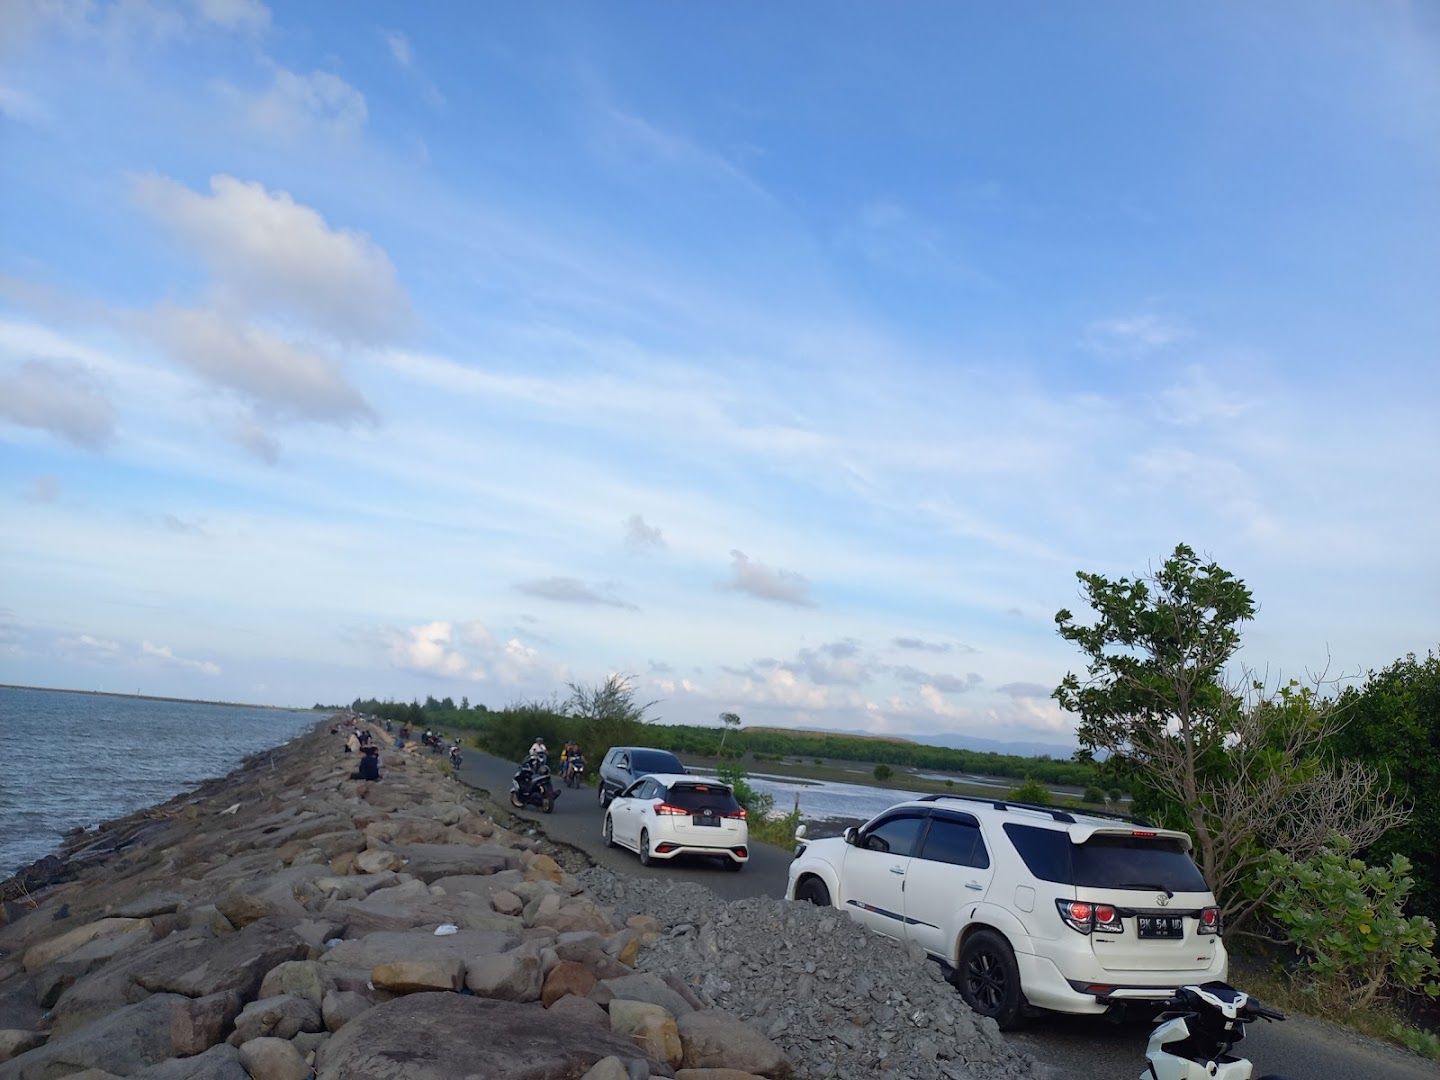 Pantai Mangrove Ulee Lheue Photo